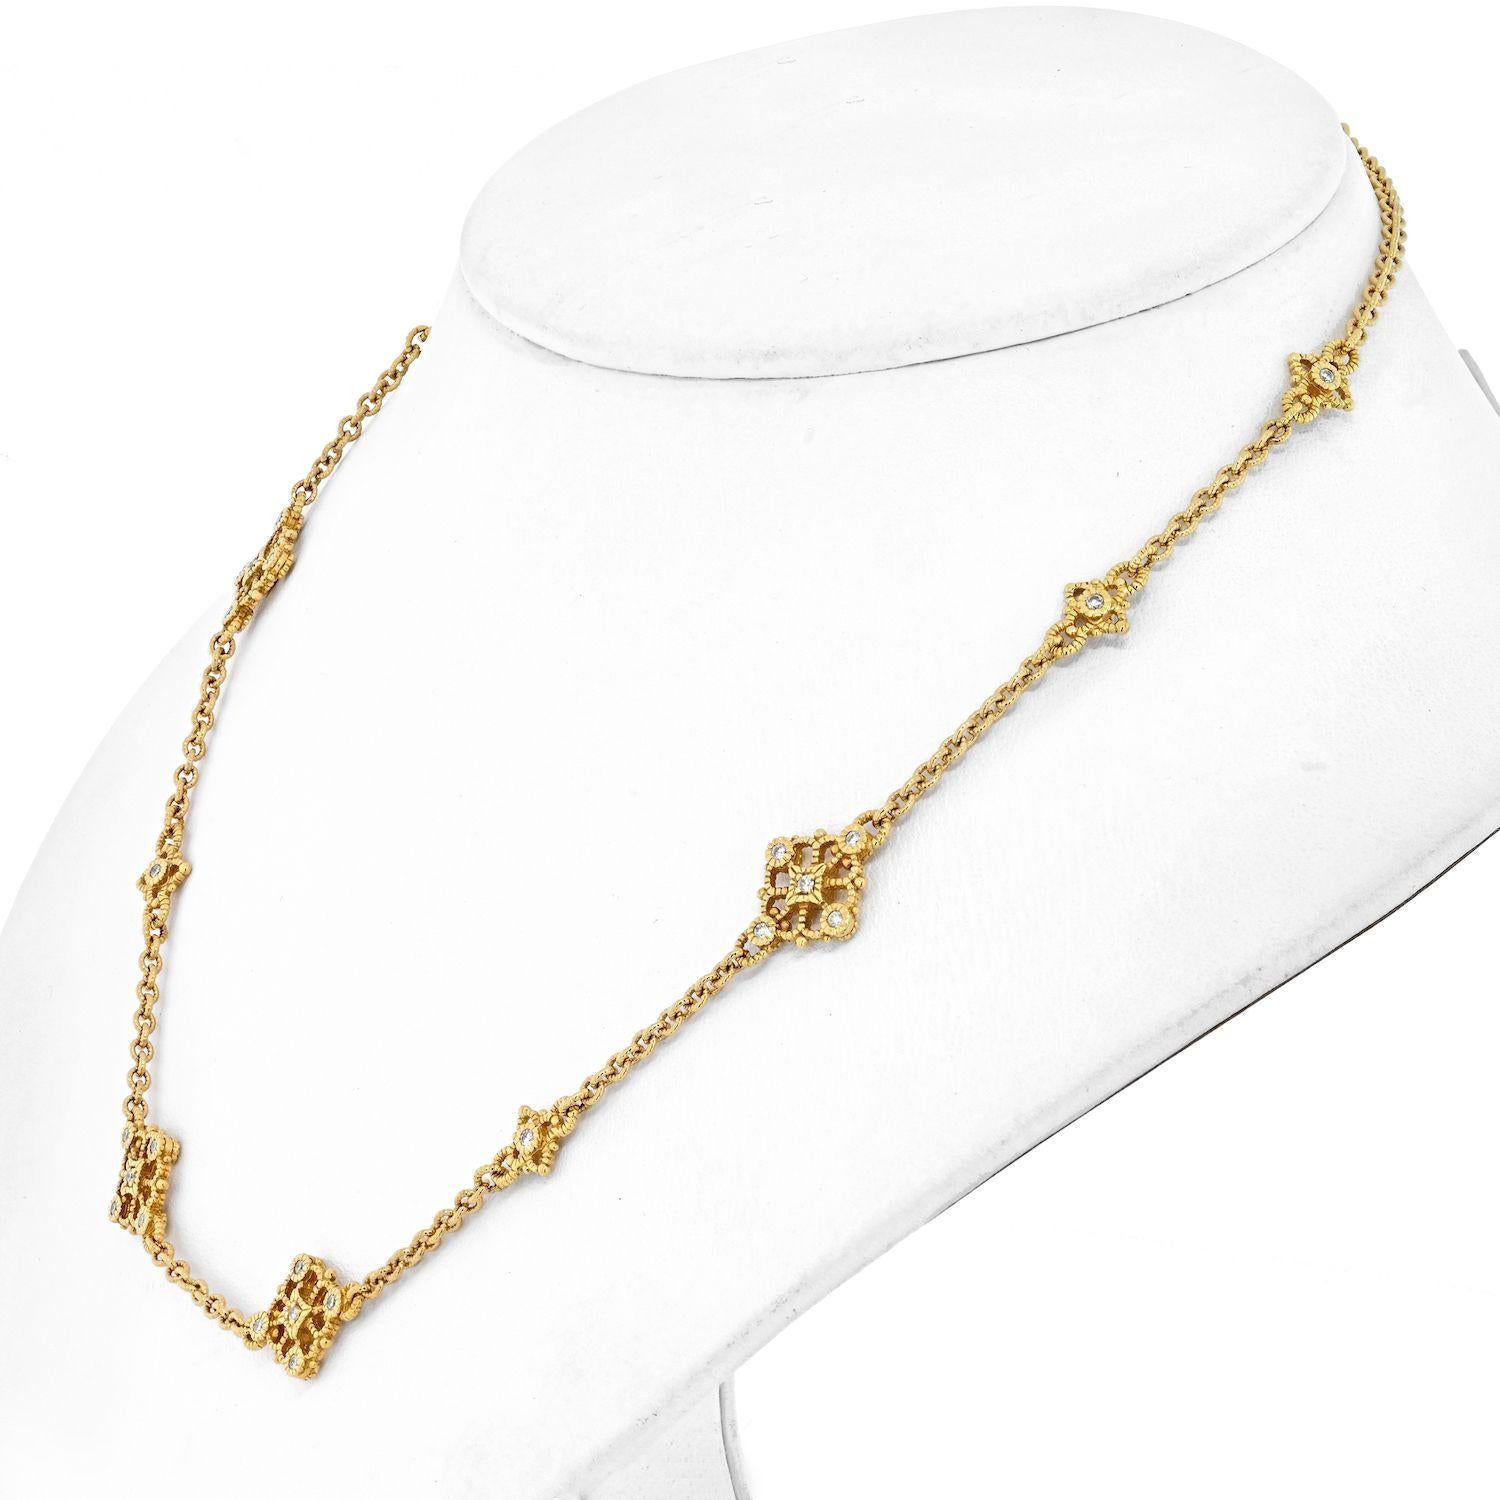 Judith Ripka 18K Yellow Gold Necklace & Earrings Jewelry Set 1